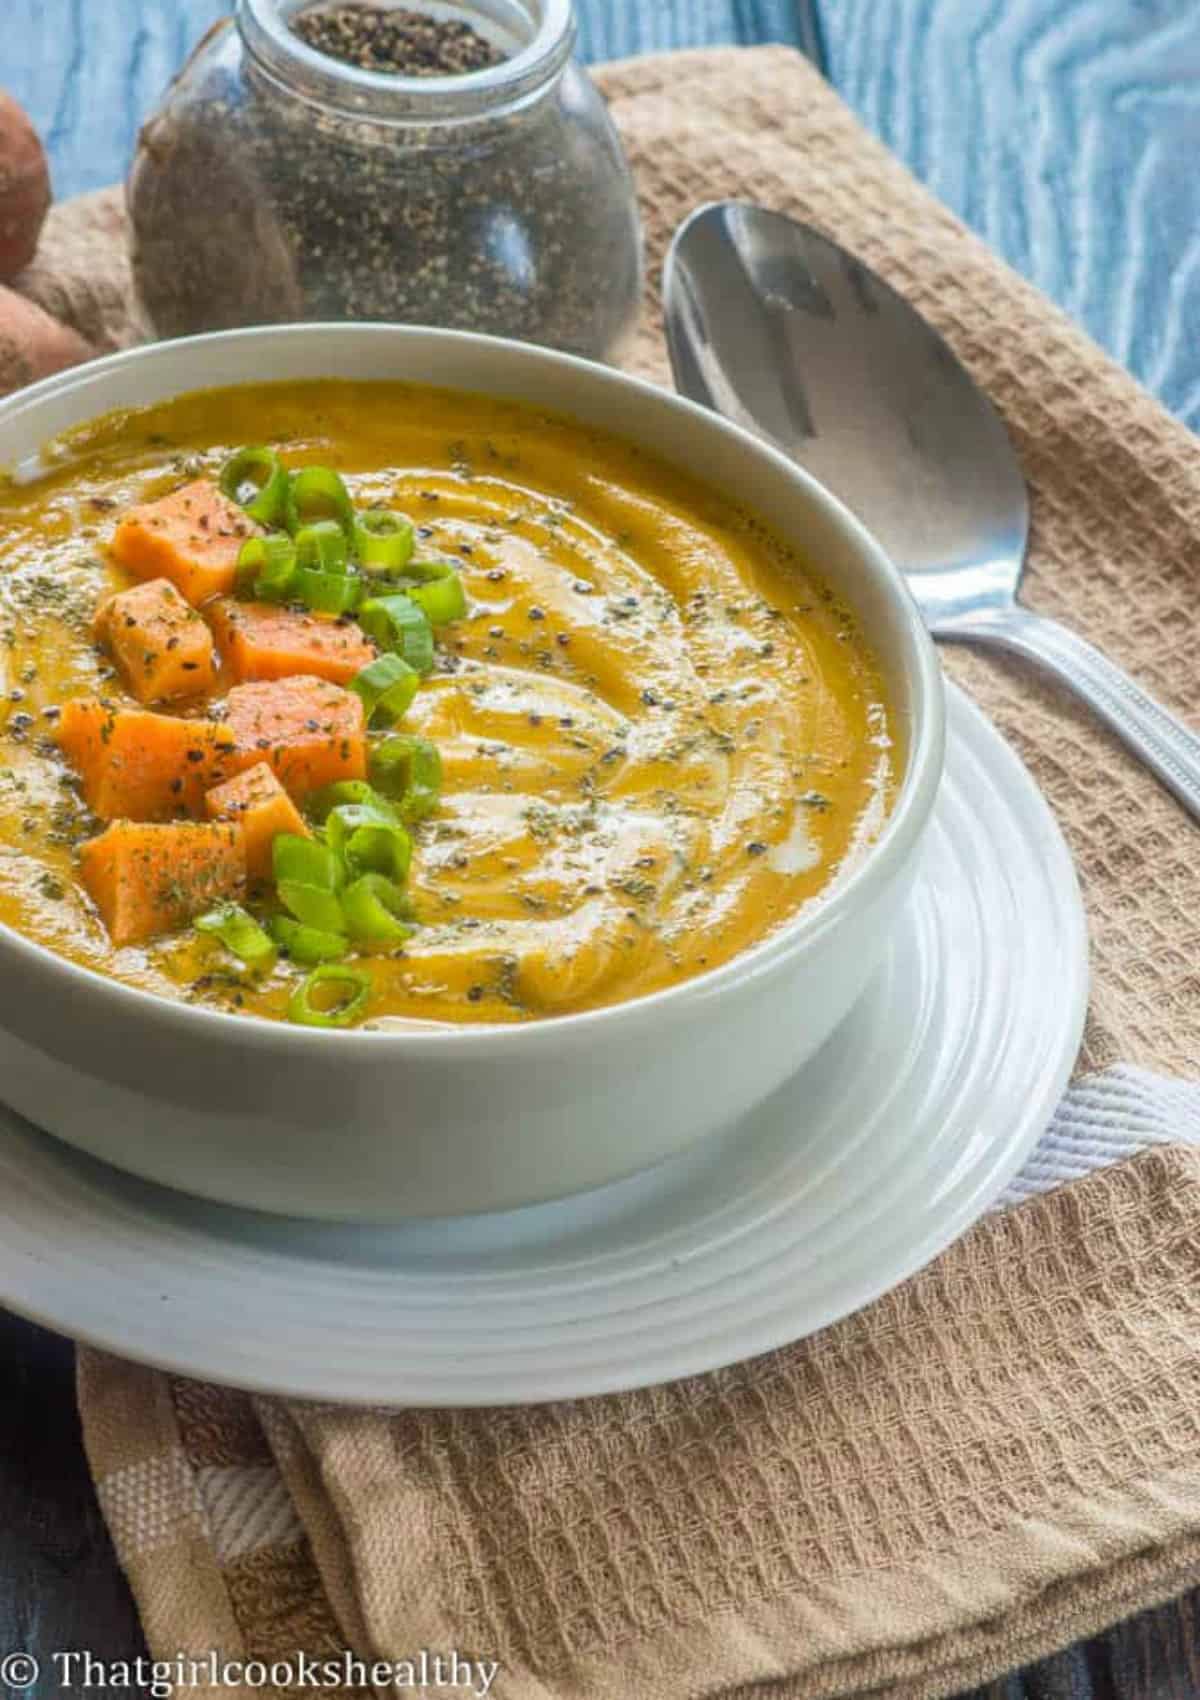 half a bowl of soup